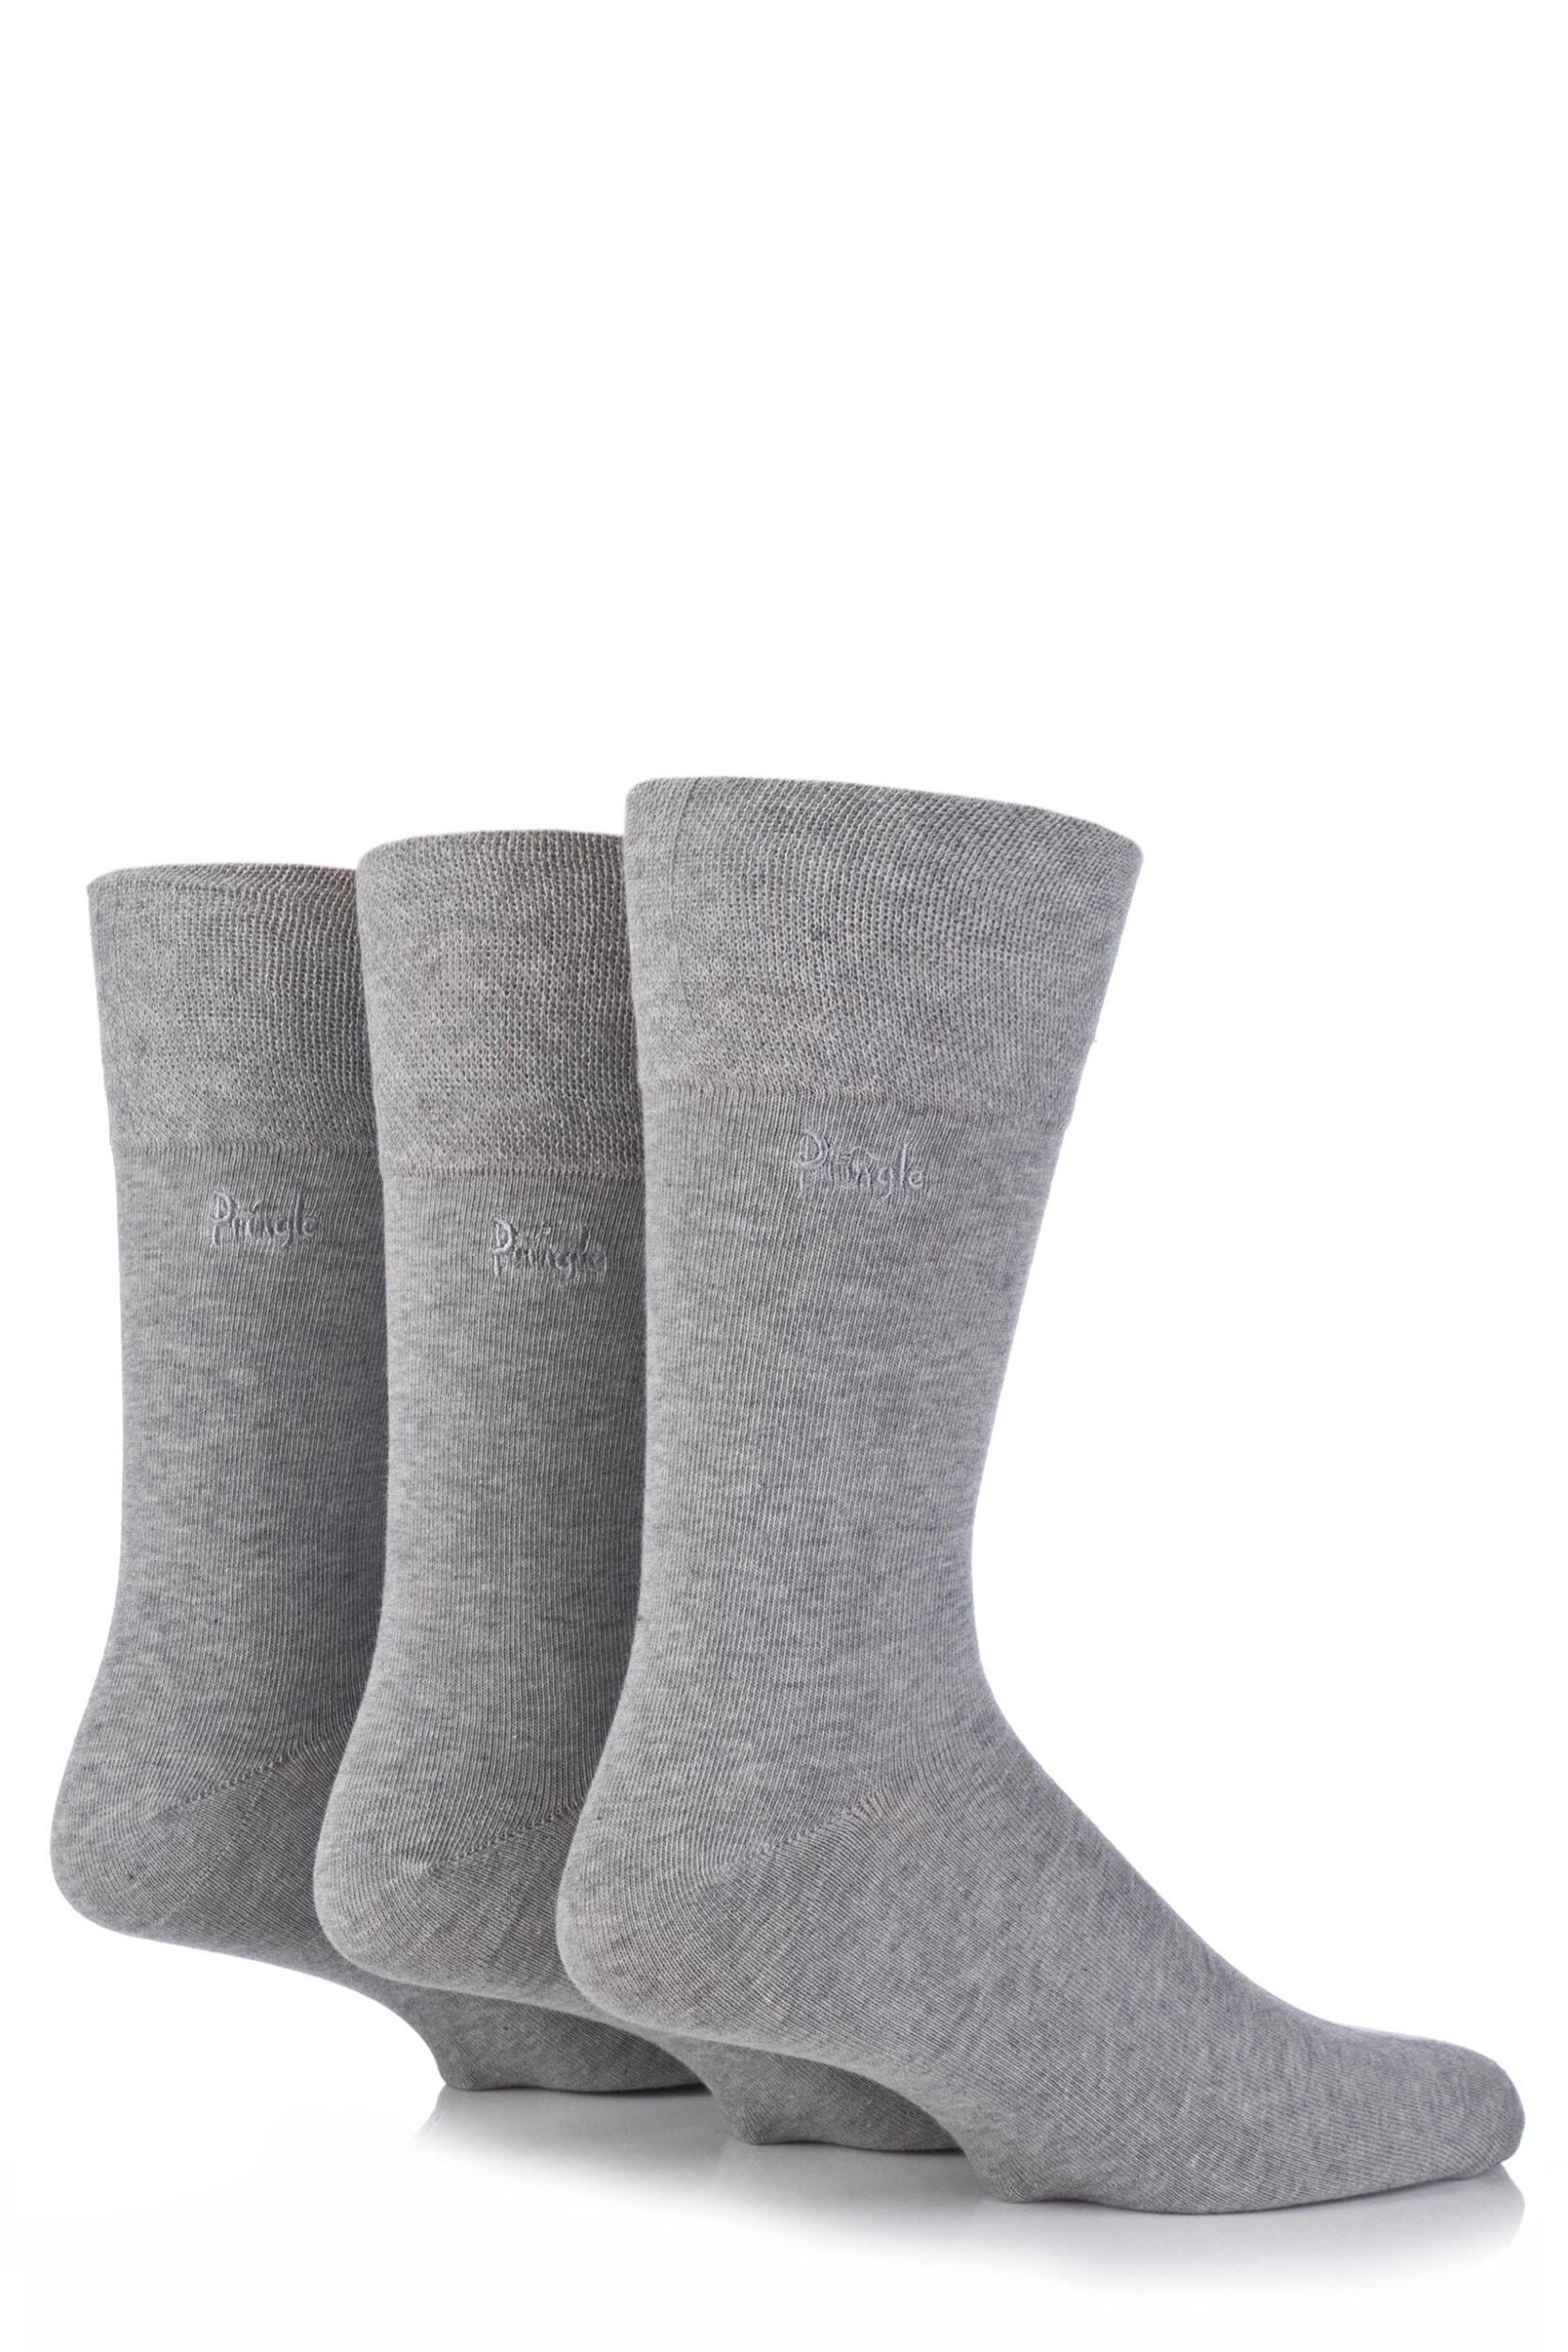 Mens 3 Pair Pringle Dunvegan Comfort Cuff Plain Cotton Socks